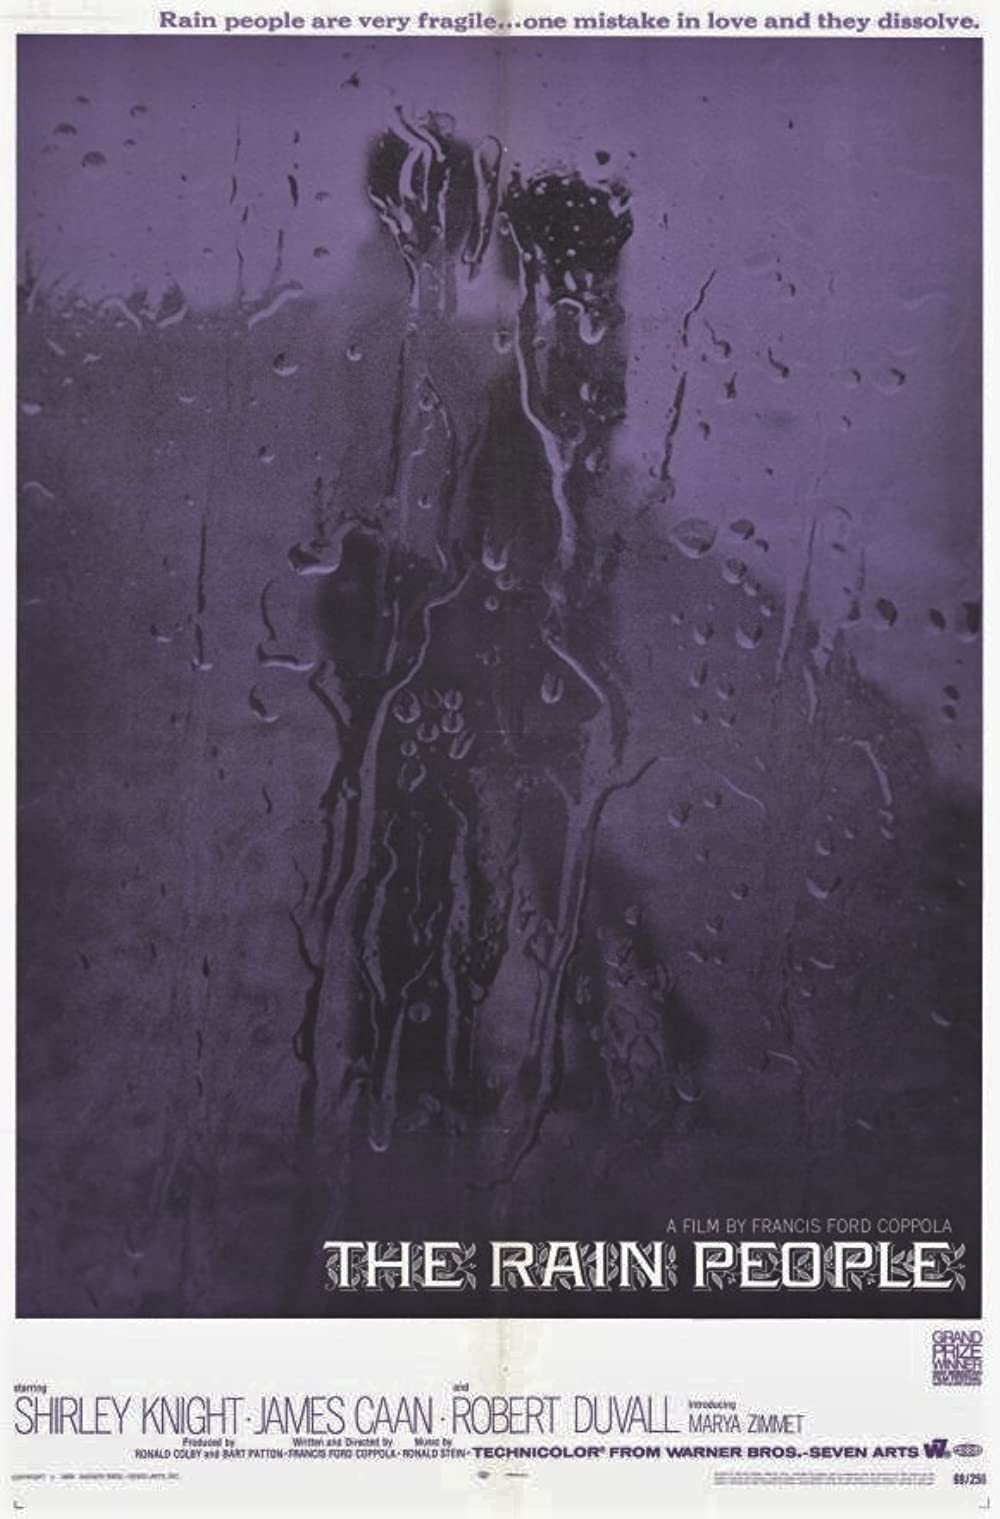 Filmbeschreibung zu The Rain People